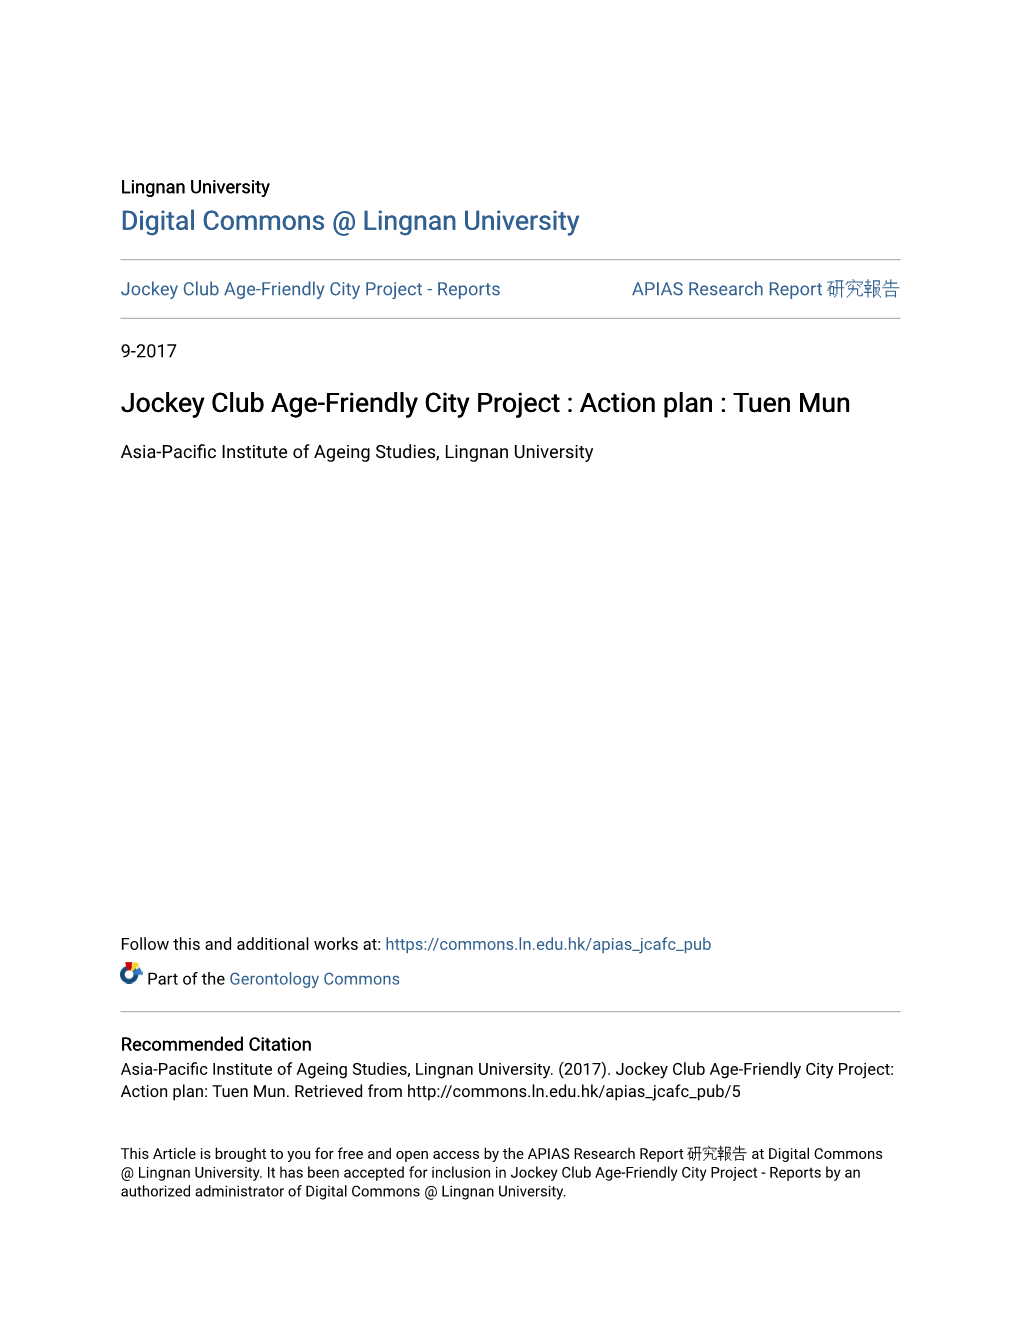 Jockey Club Age-Friendly City Project : Action Plan : Tuen Mun